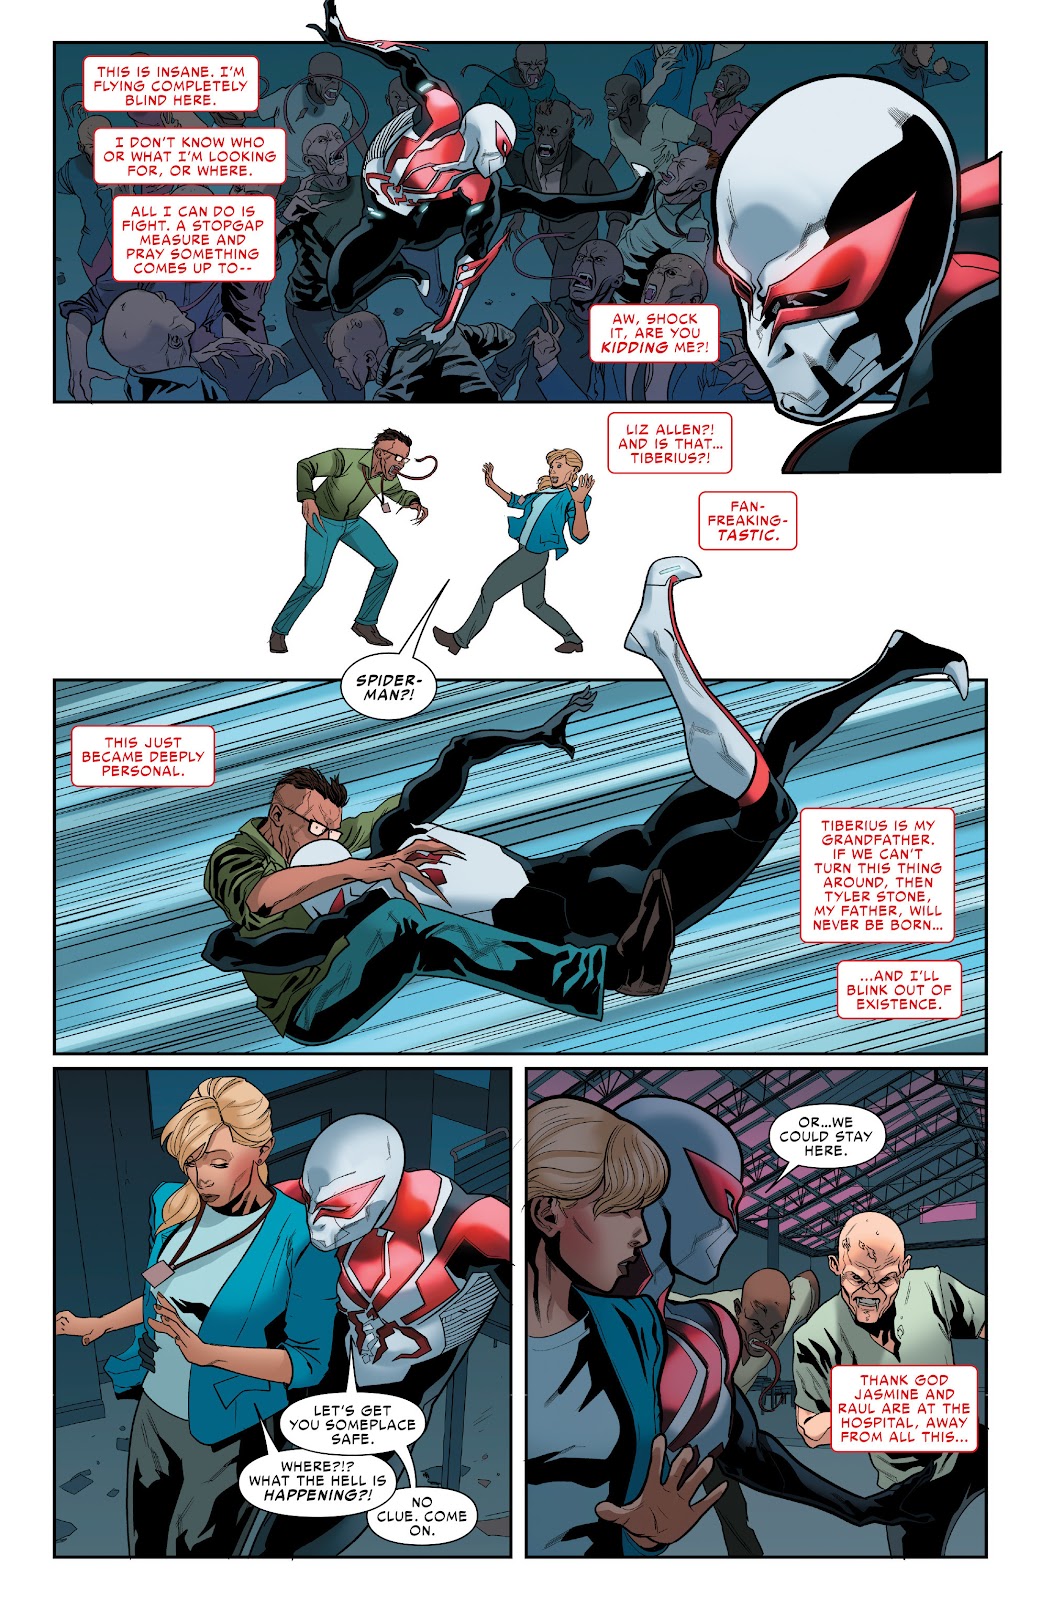 Spider-Man 2099 (2015) issue 19 - Page 6